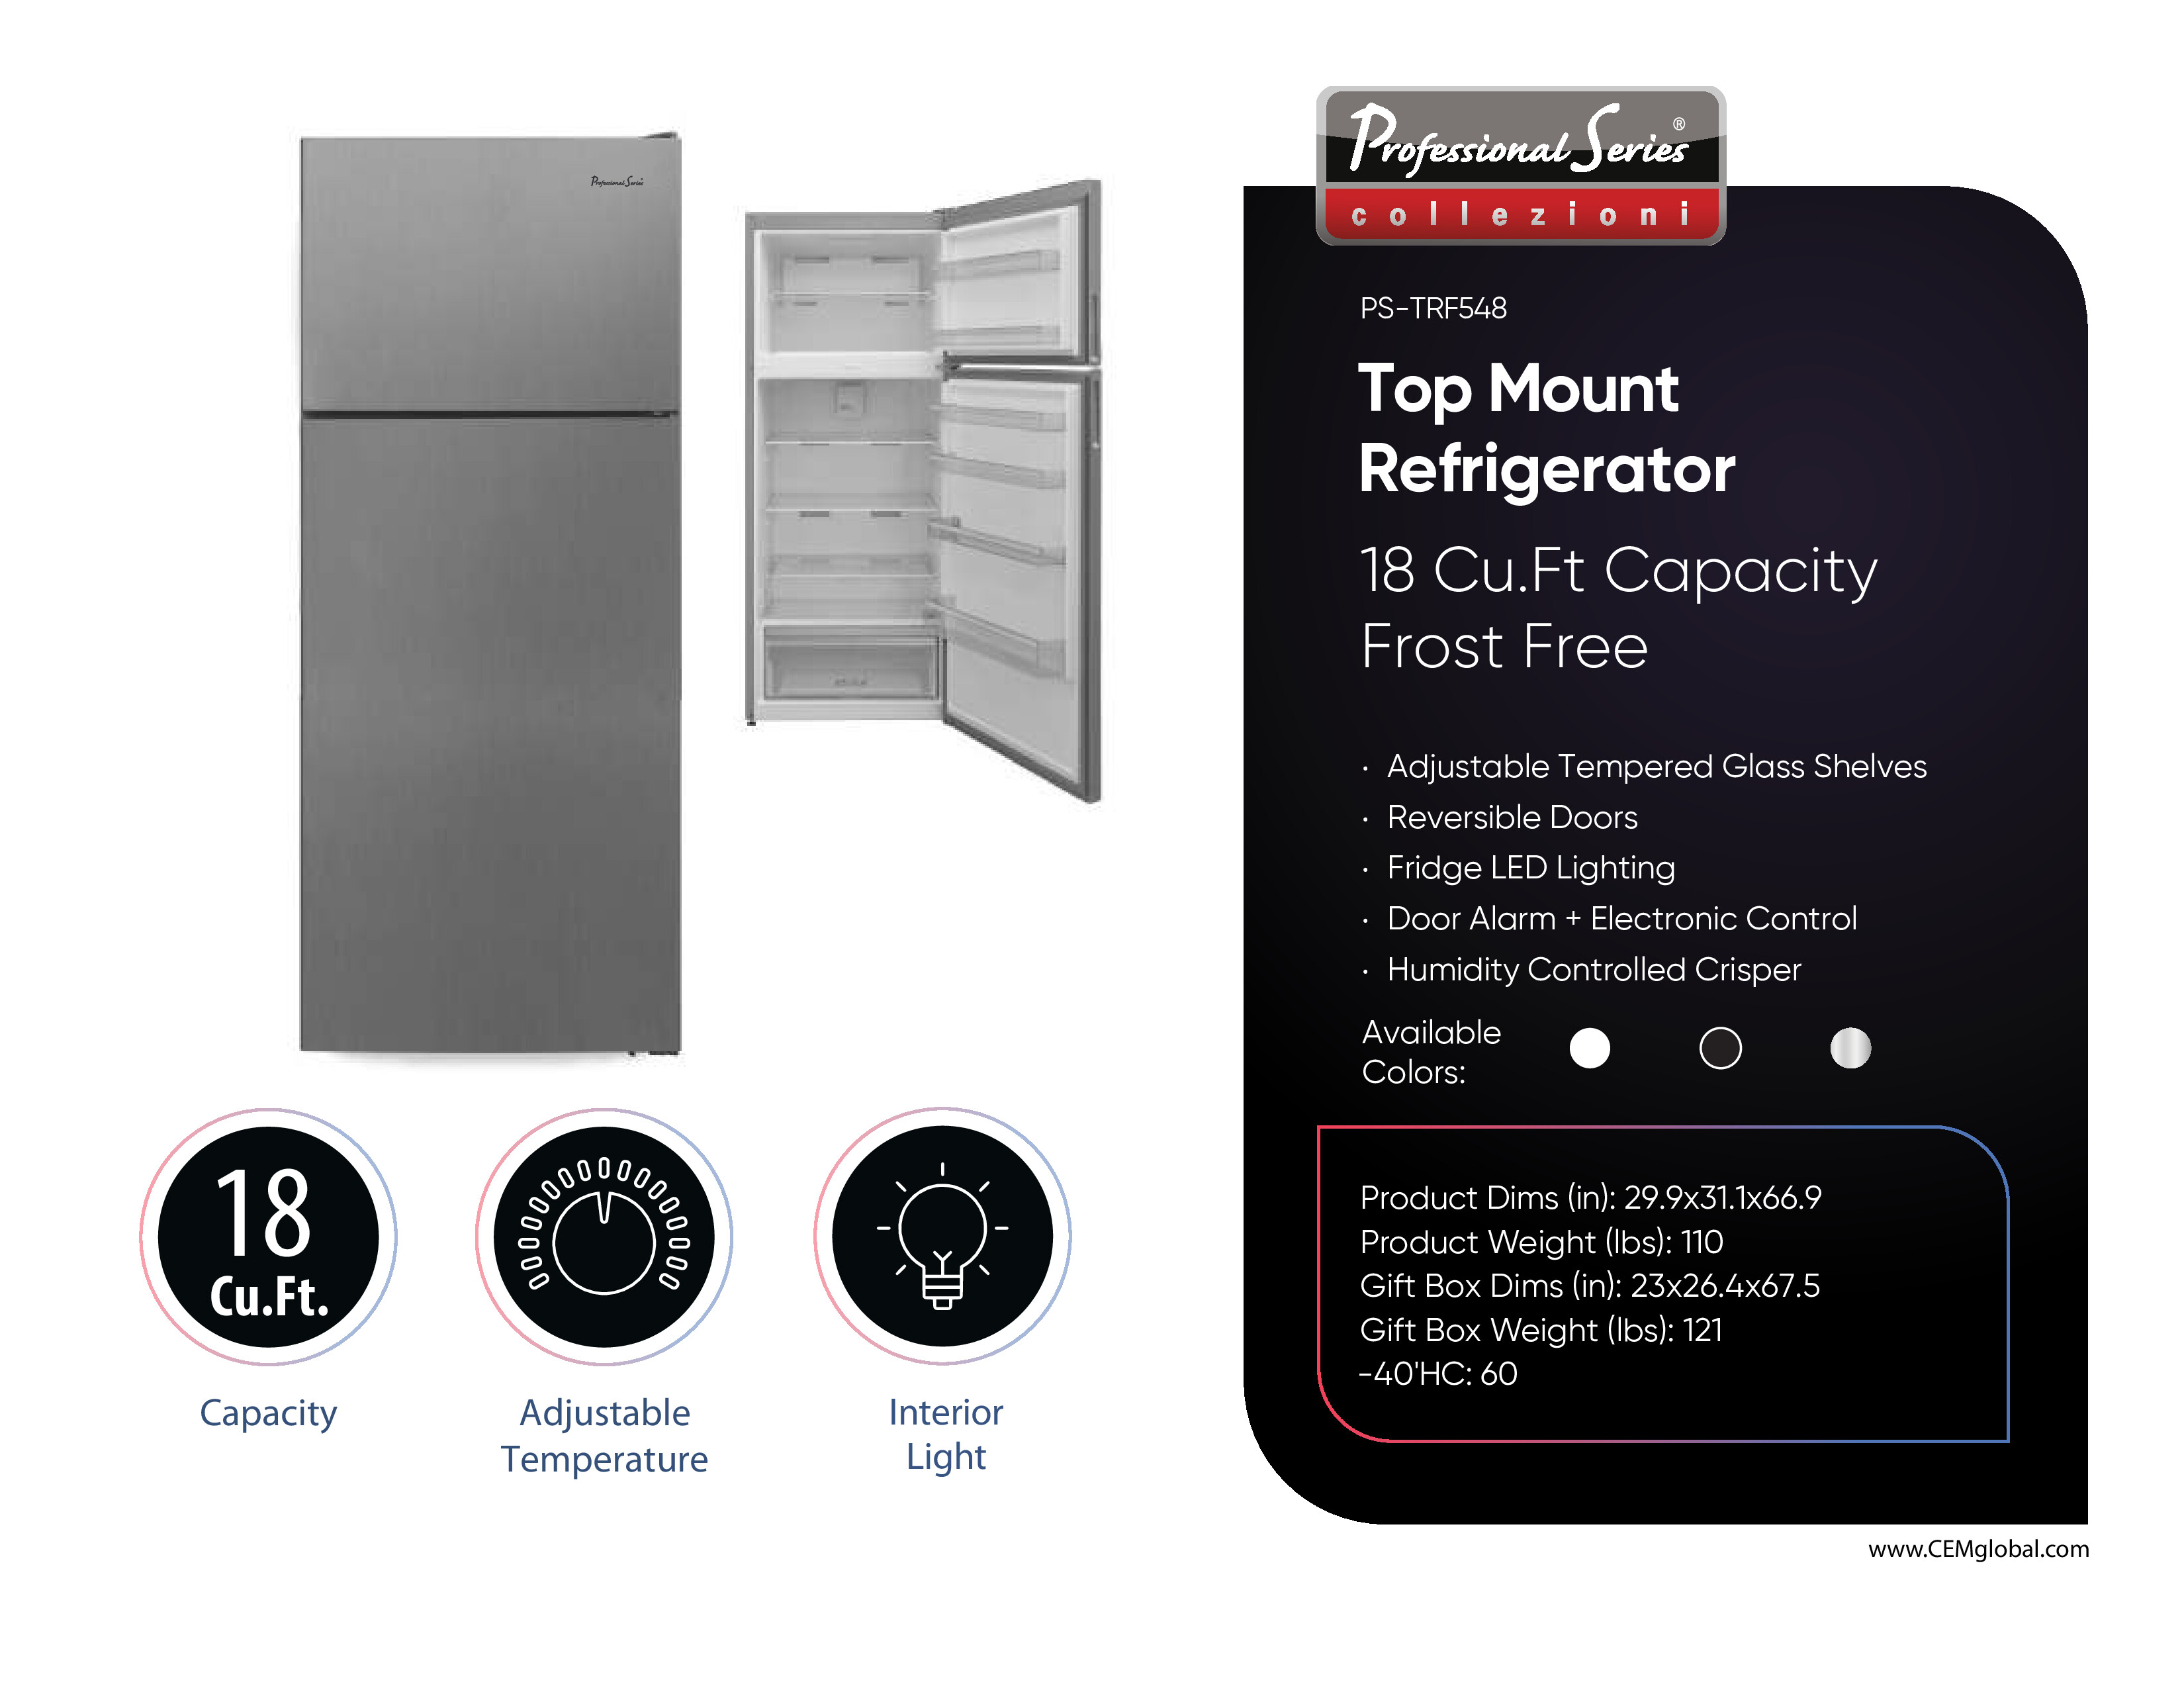 Top Mount Refrigerator 18 Cu.Ft Capacity